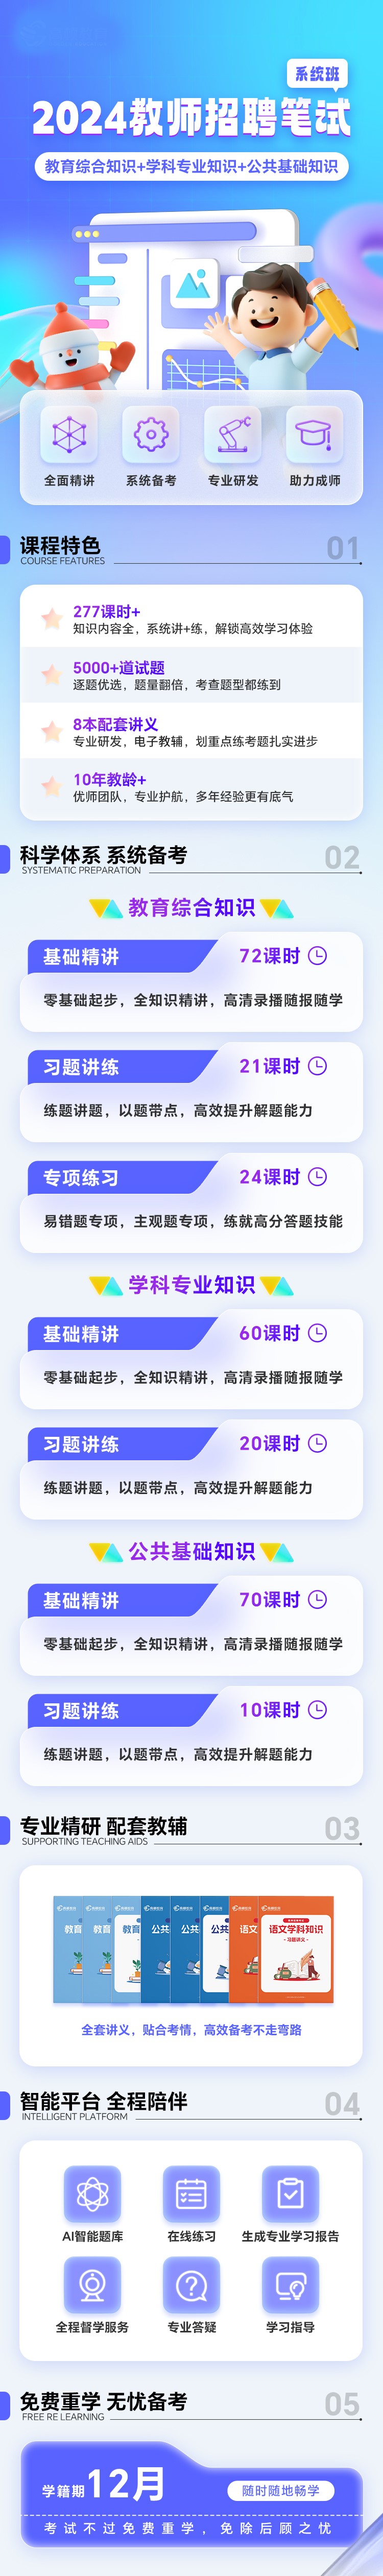 https://simg01.gaodunwangxiao.com/uploadfiles/product-center/202404/19/da742_20240419165243.jpg